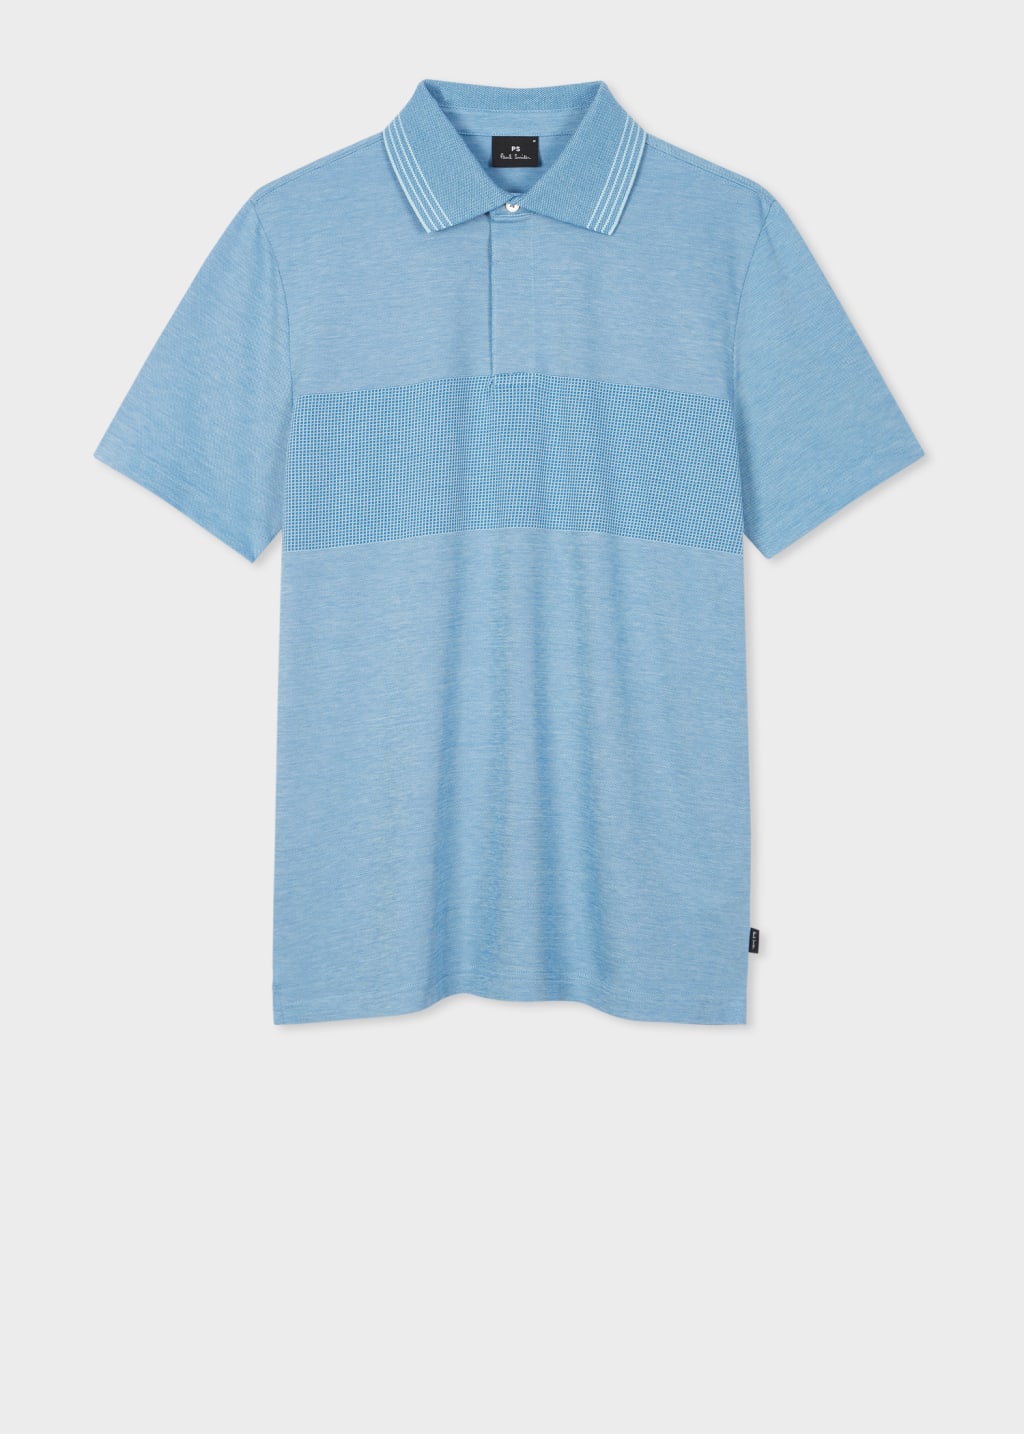 Front View - Powder Blue Jacquard Cotton Polo Shirt Paul Smith